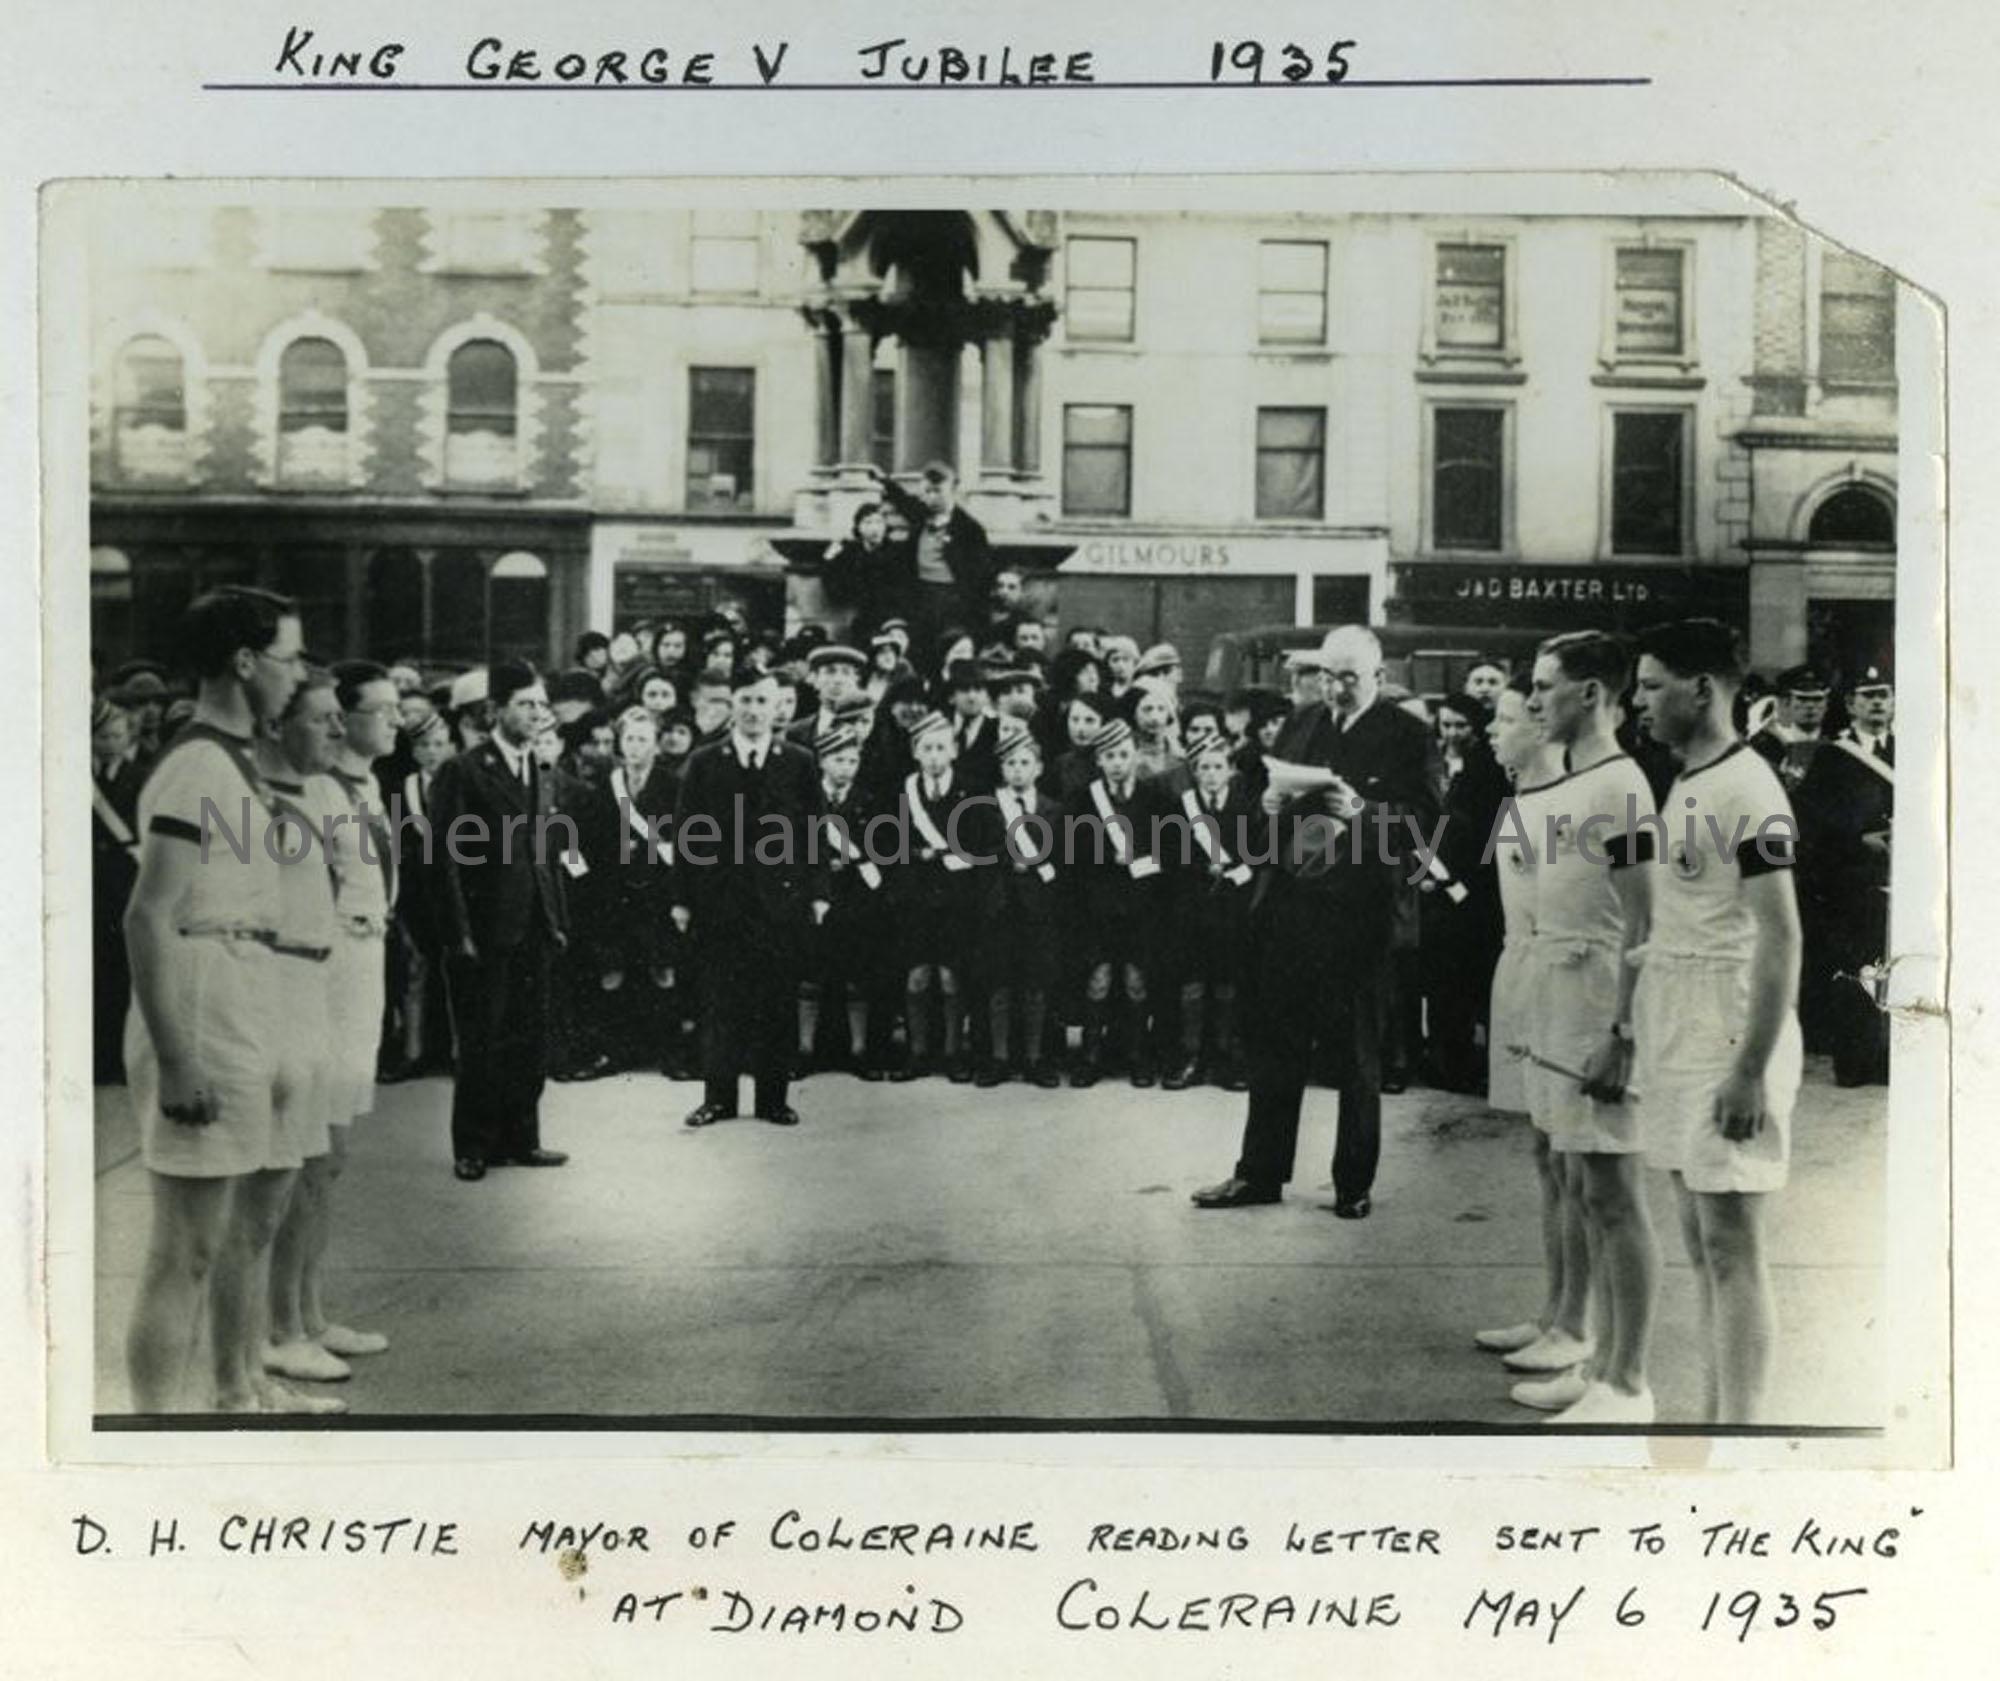 King George the V Jubilee at Diamond Coleraine, 1935